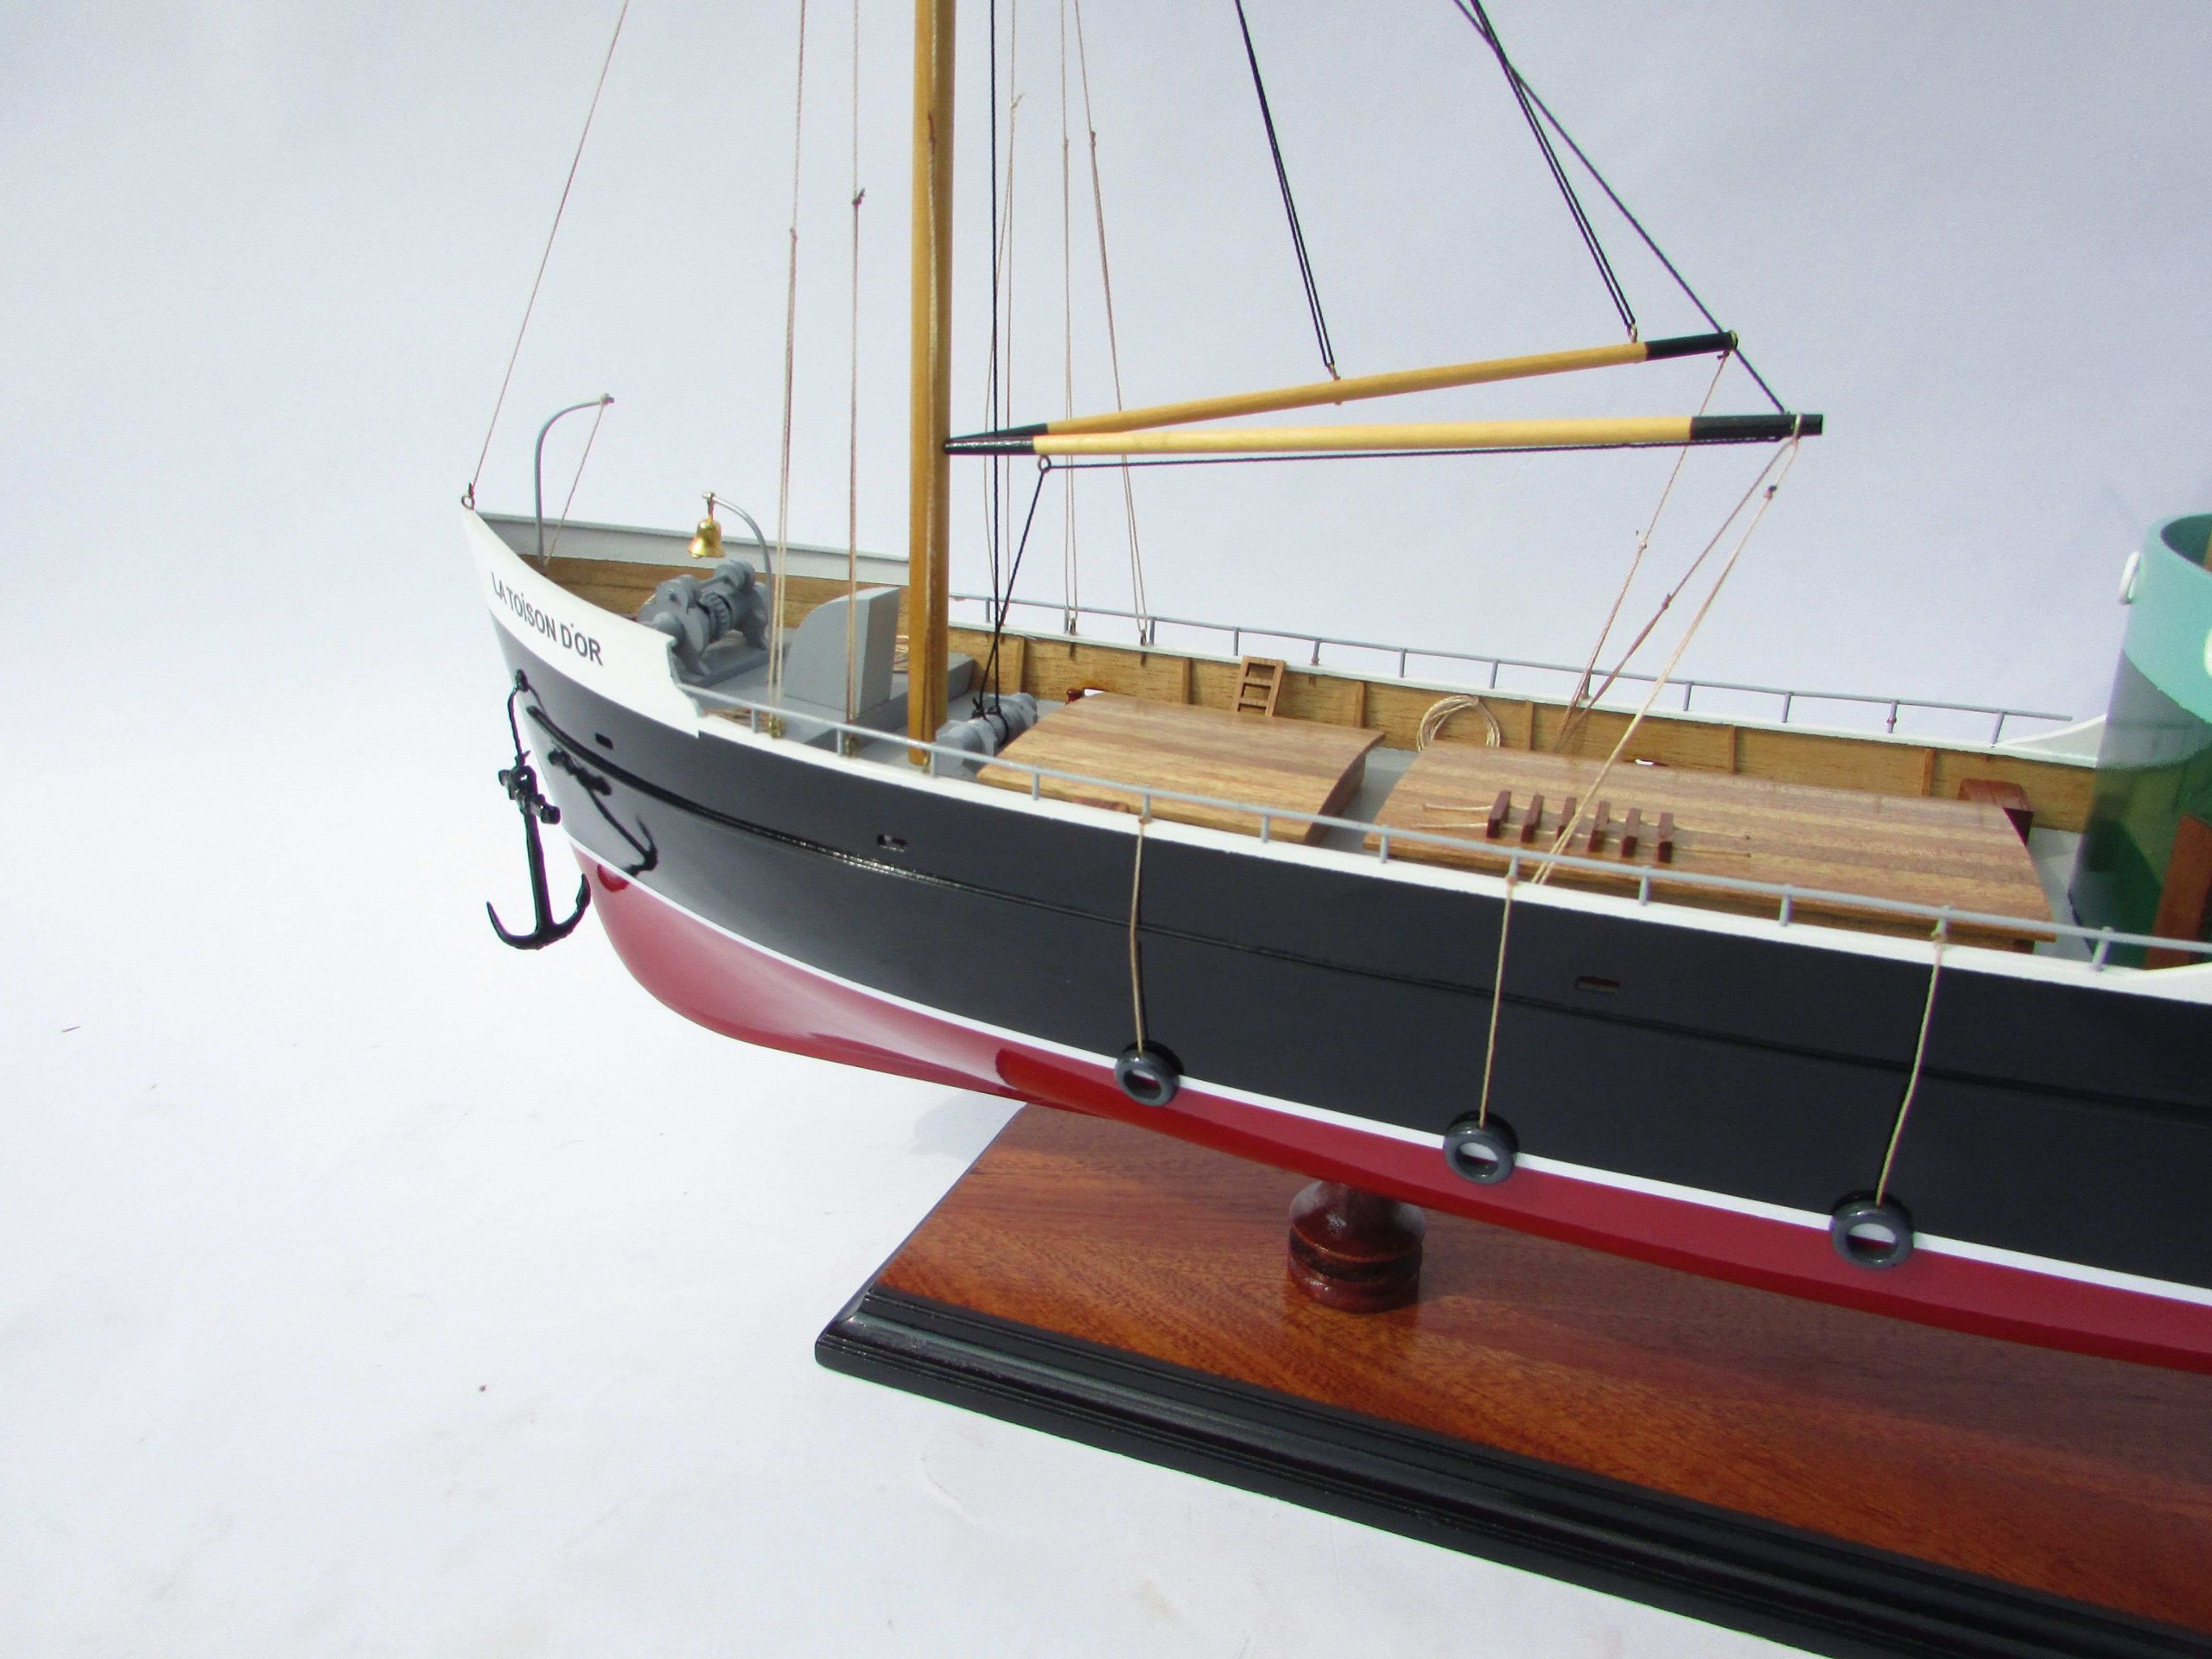 La Toison D'or Tintin Model Ship - GN